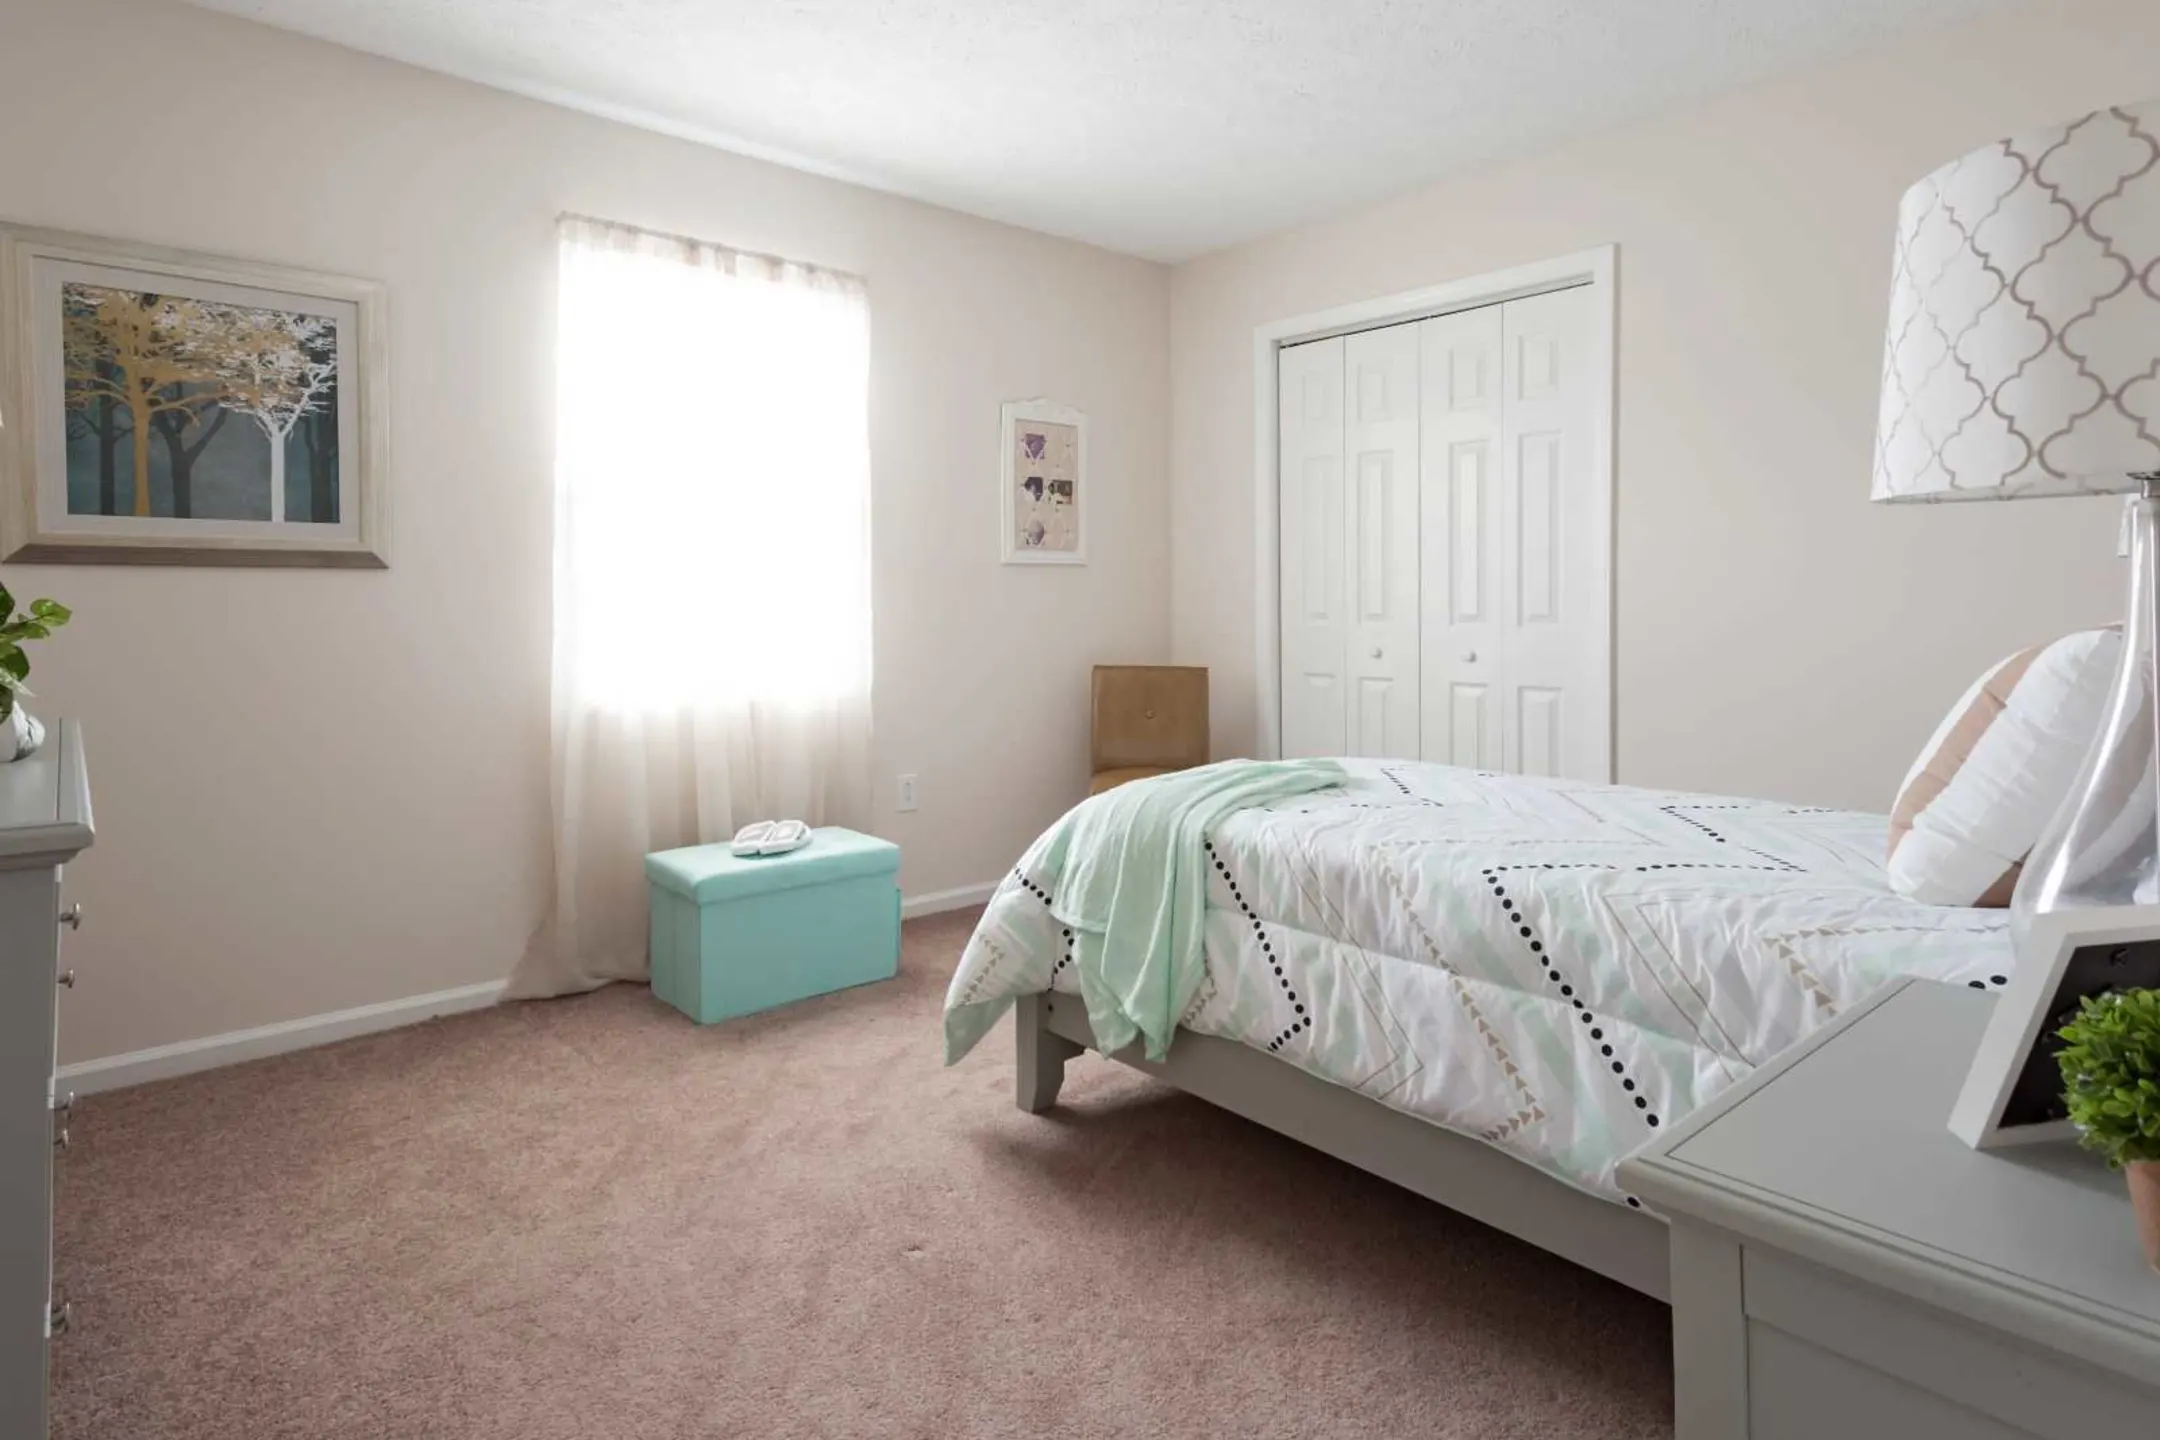 Bedroom - Commonwealth Living at Radford - Radford, VA